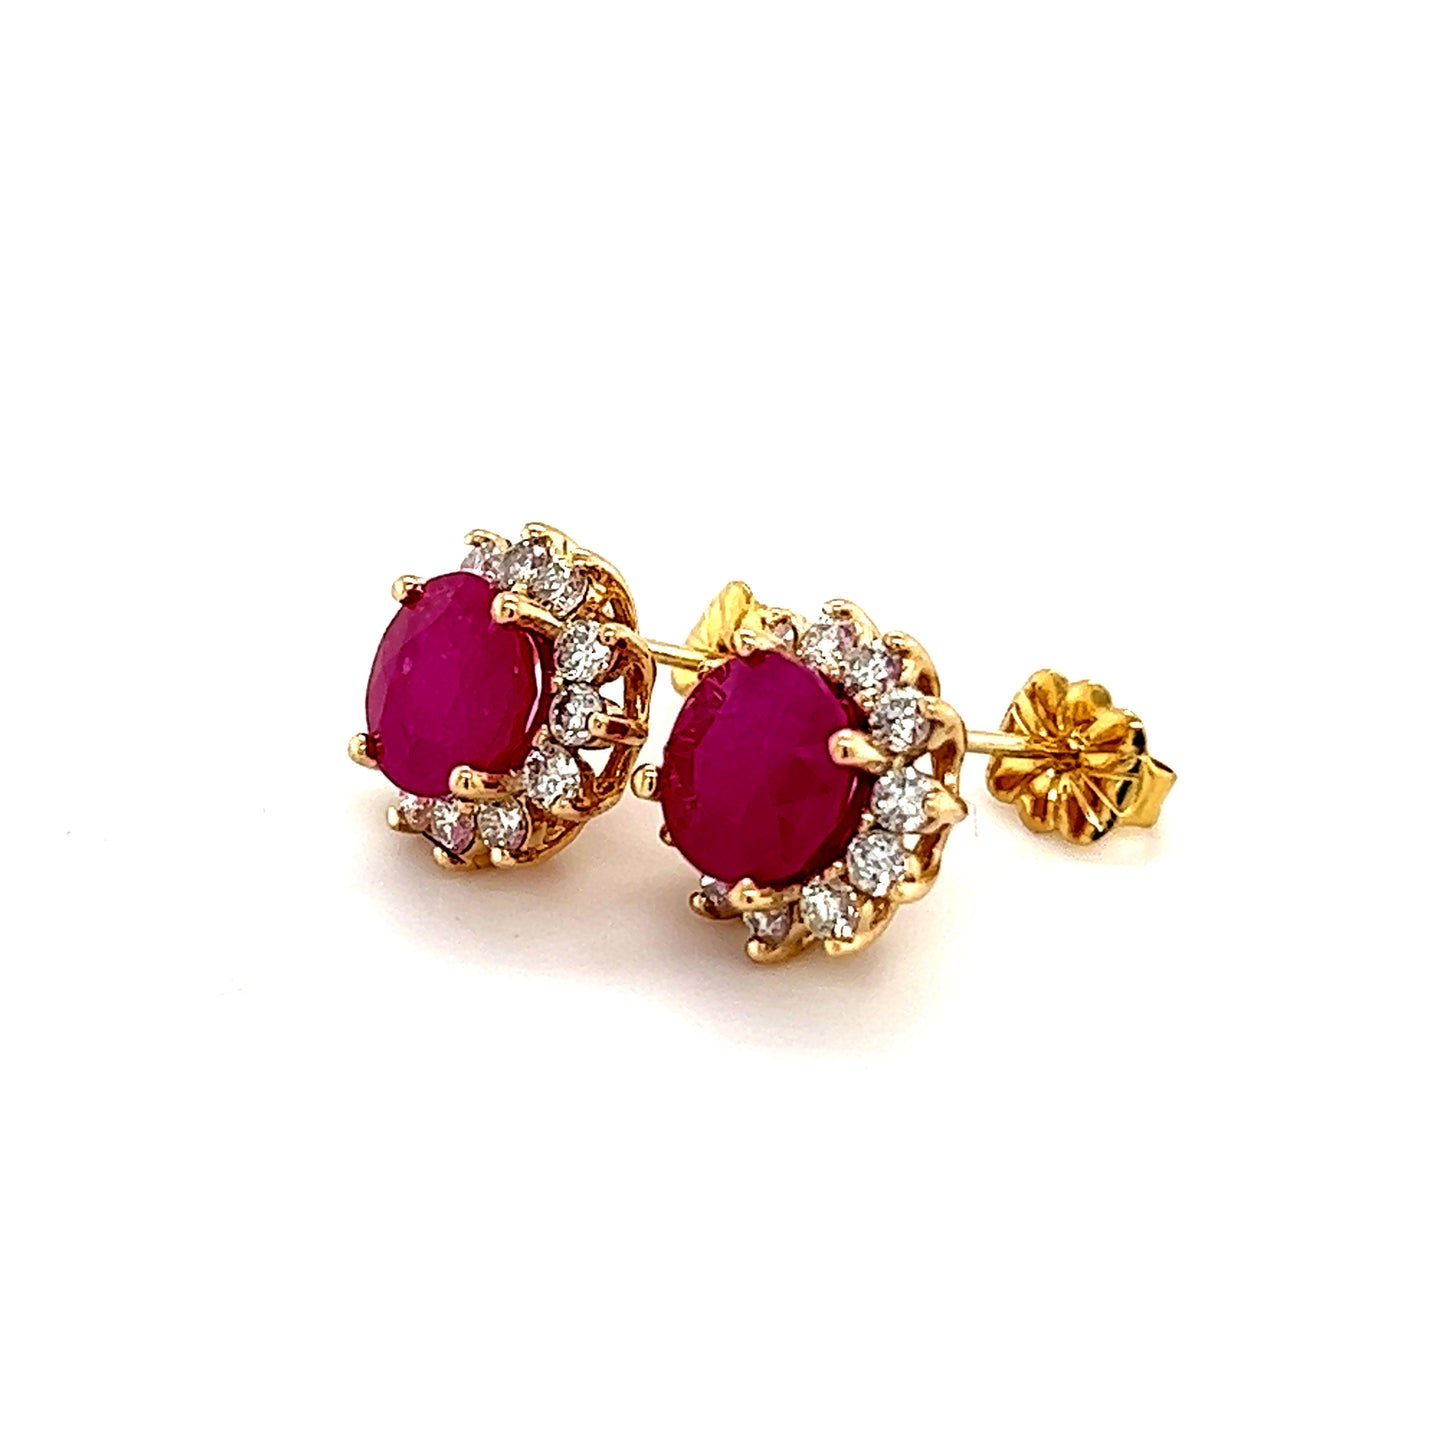 Natural Ruby Diamond Earrings 14k Gold 3.72 TCW Certified $5,950 211346 - Certified Estate Jewelry